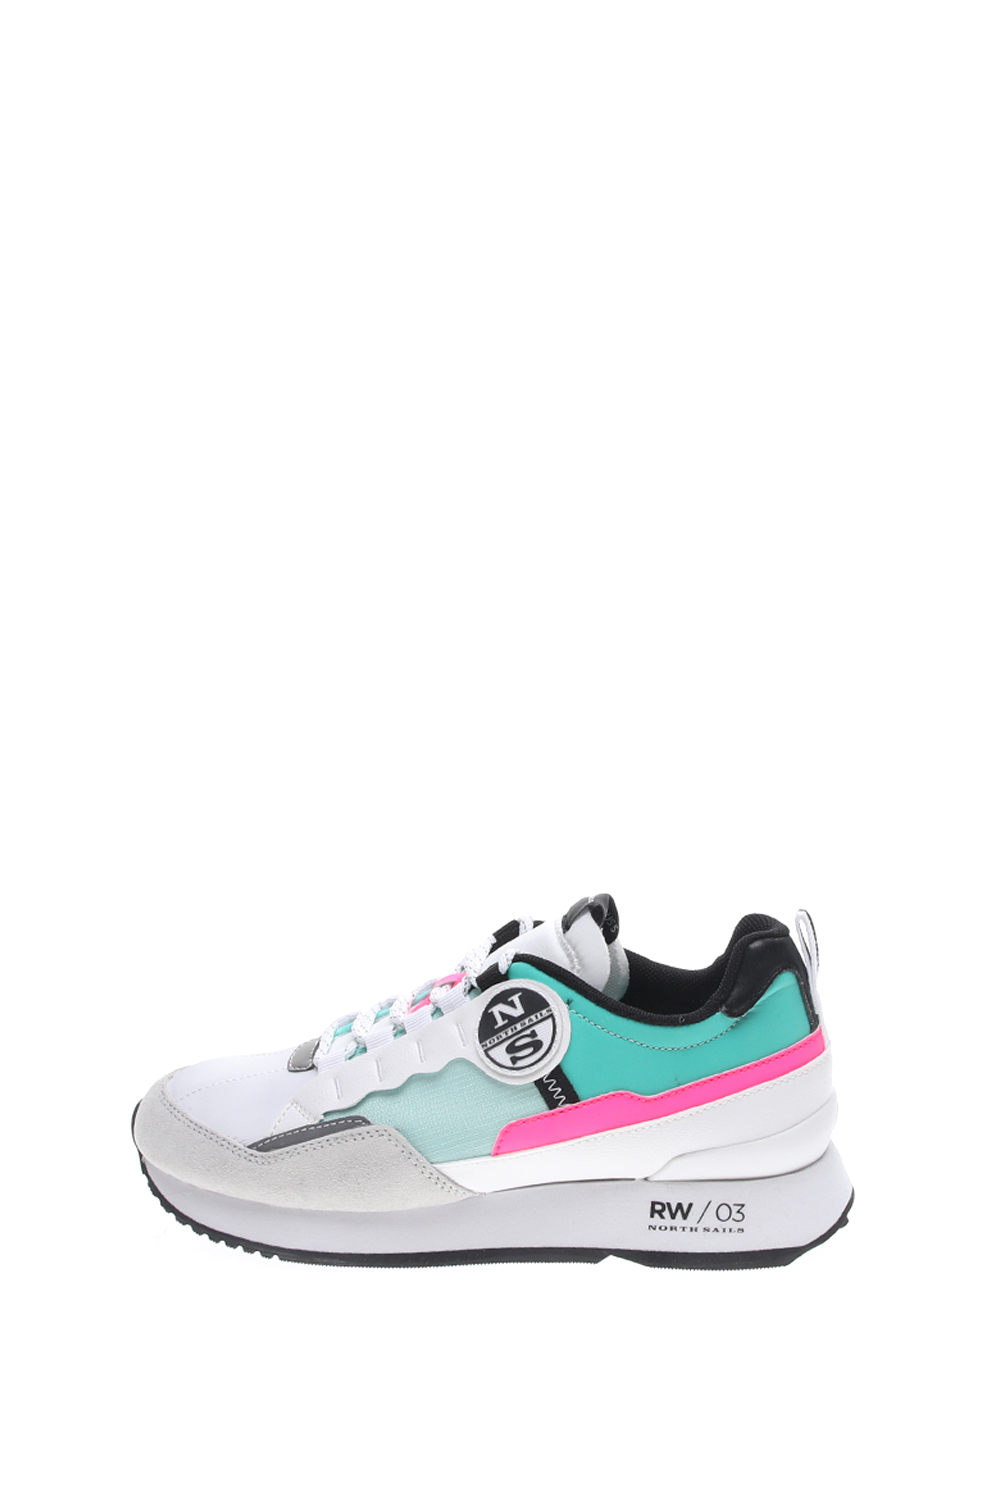 NORTH SAILS - Γυναικεία sneakers NORTH SAILS REEF λευκά μπλε ροζ Γυναικεία/Παπούτσια/Sneakers